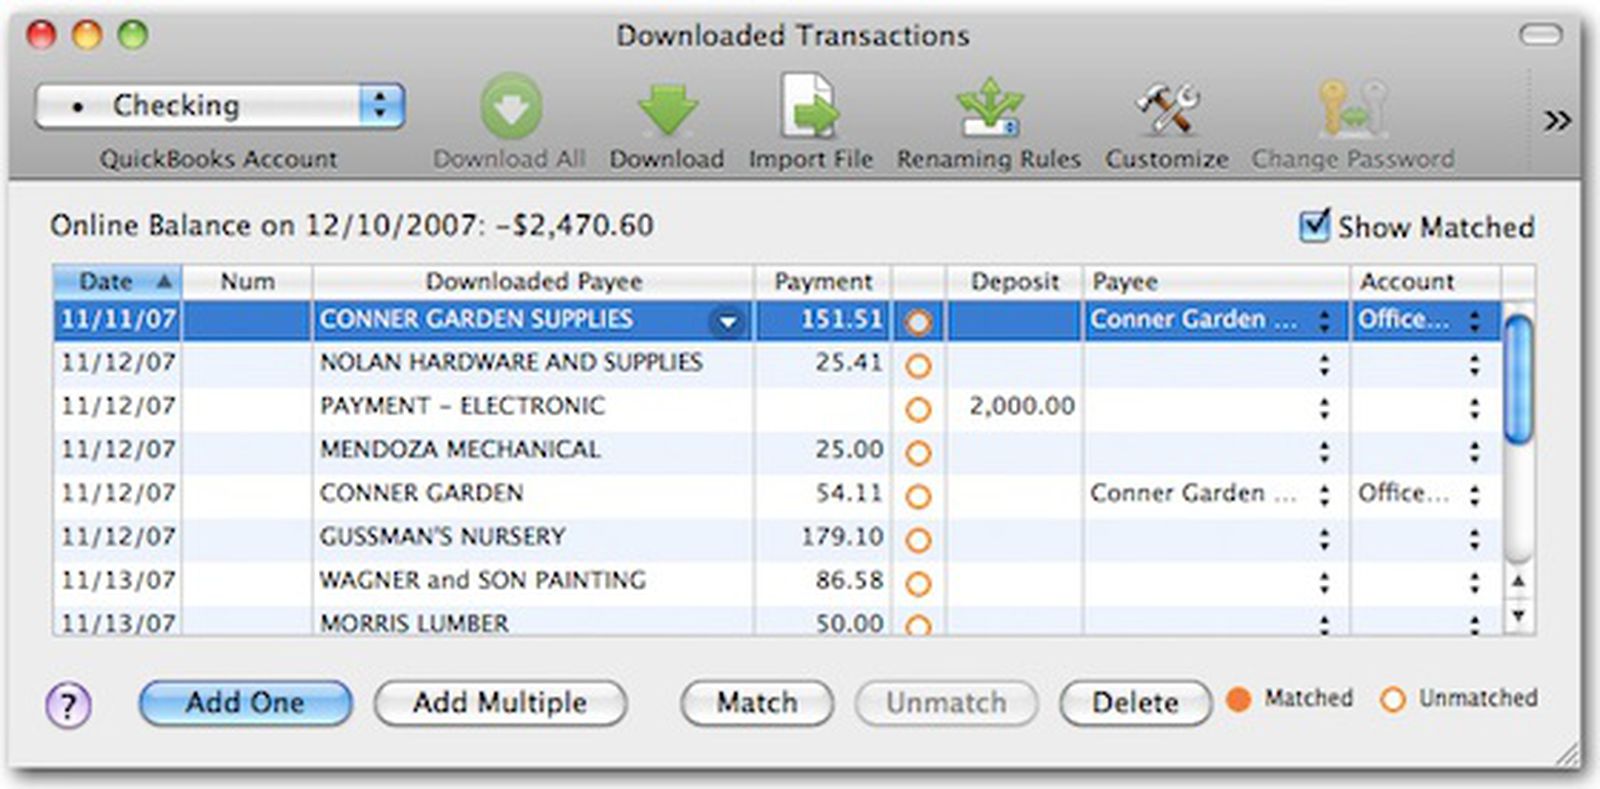 quickbooks for mac 2012 download